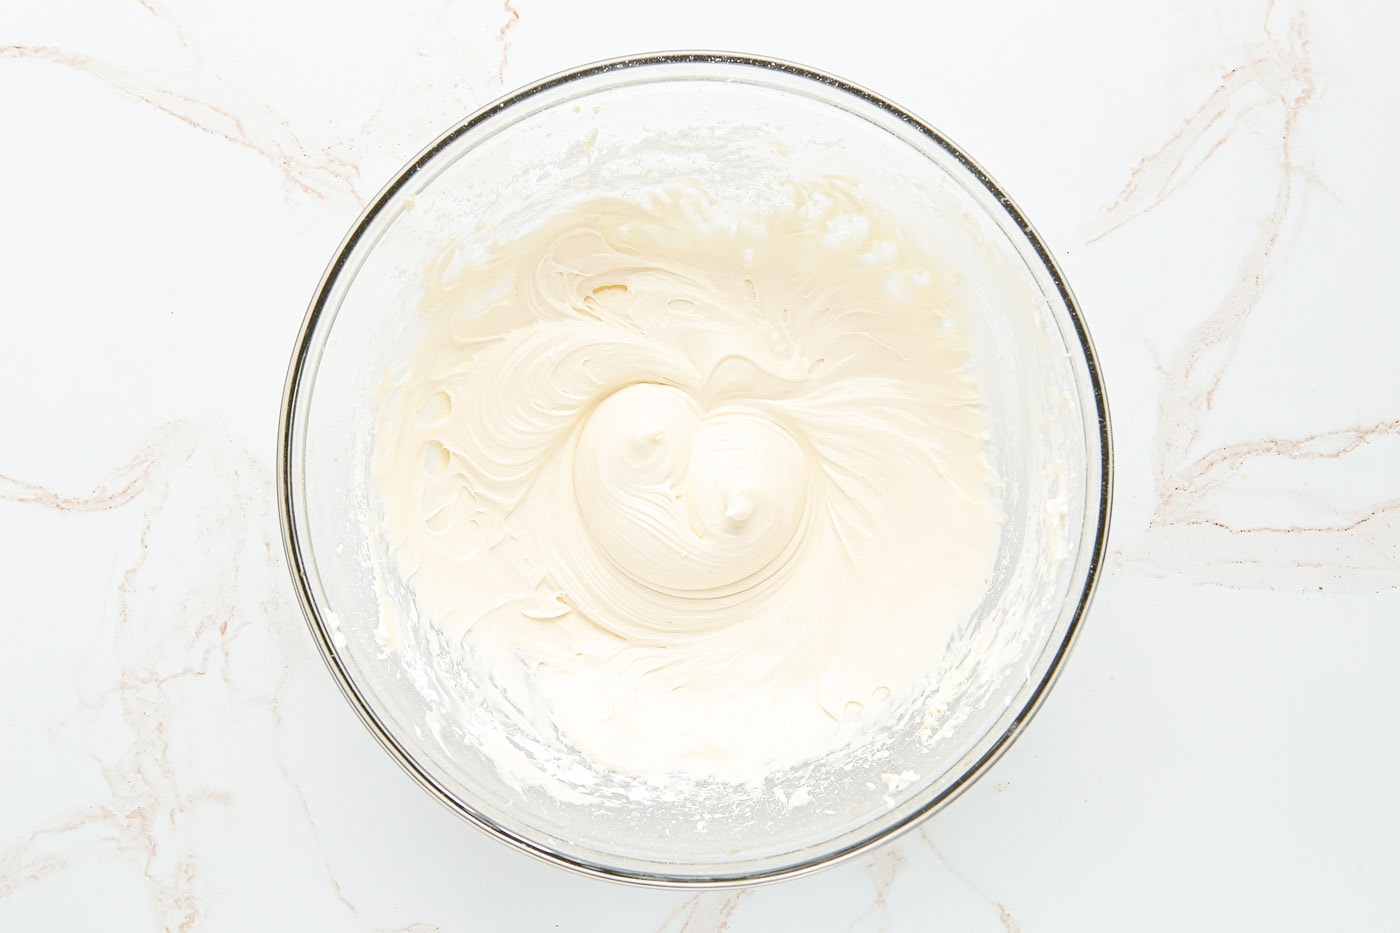 cream cheese beaten in a bowl